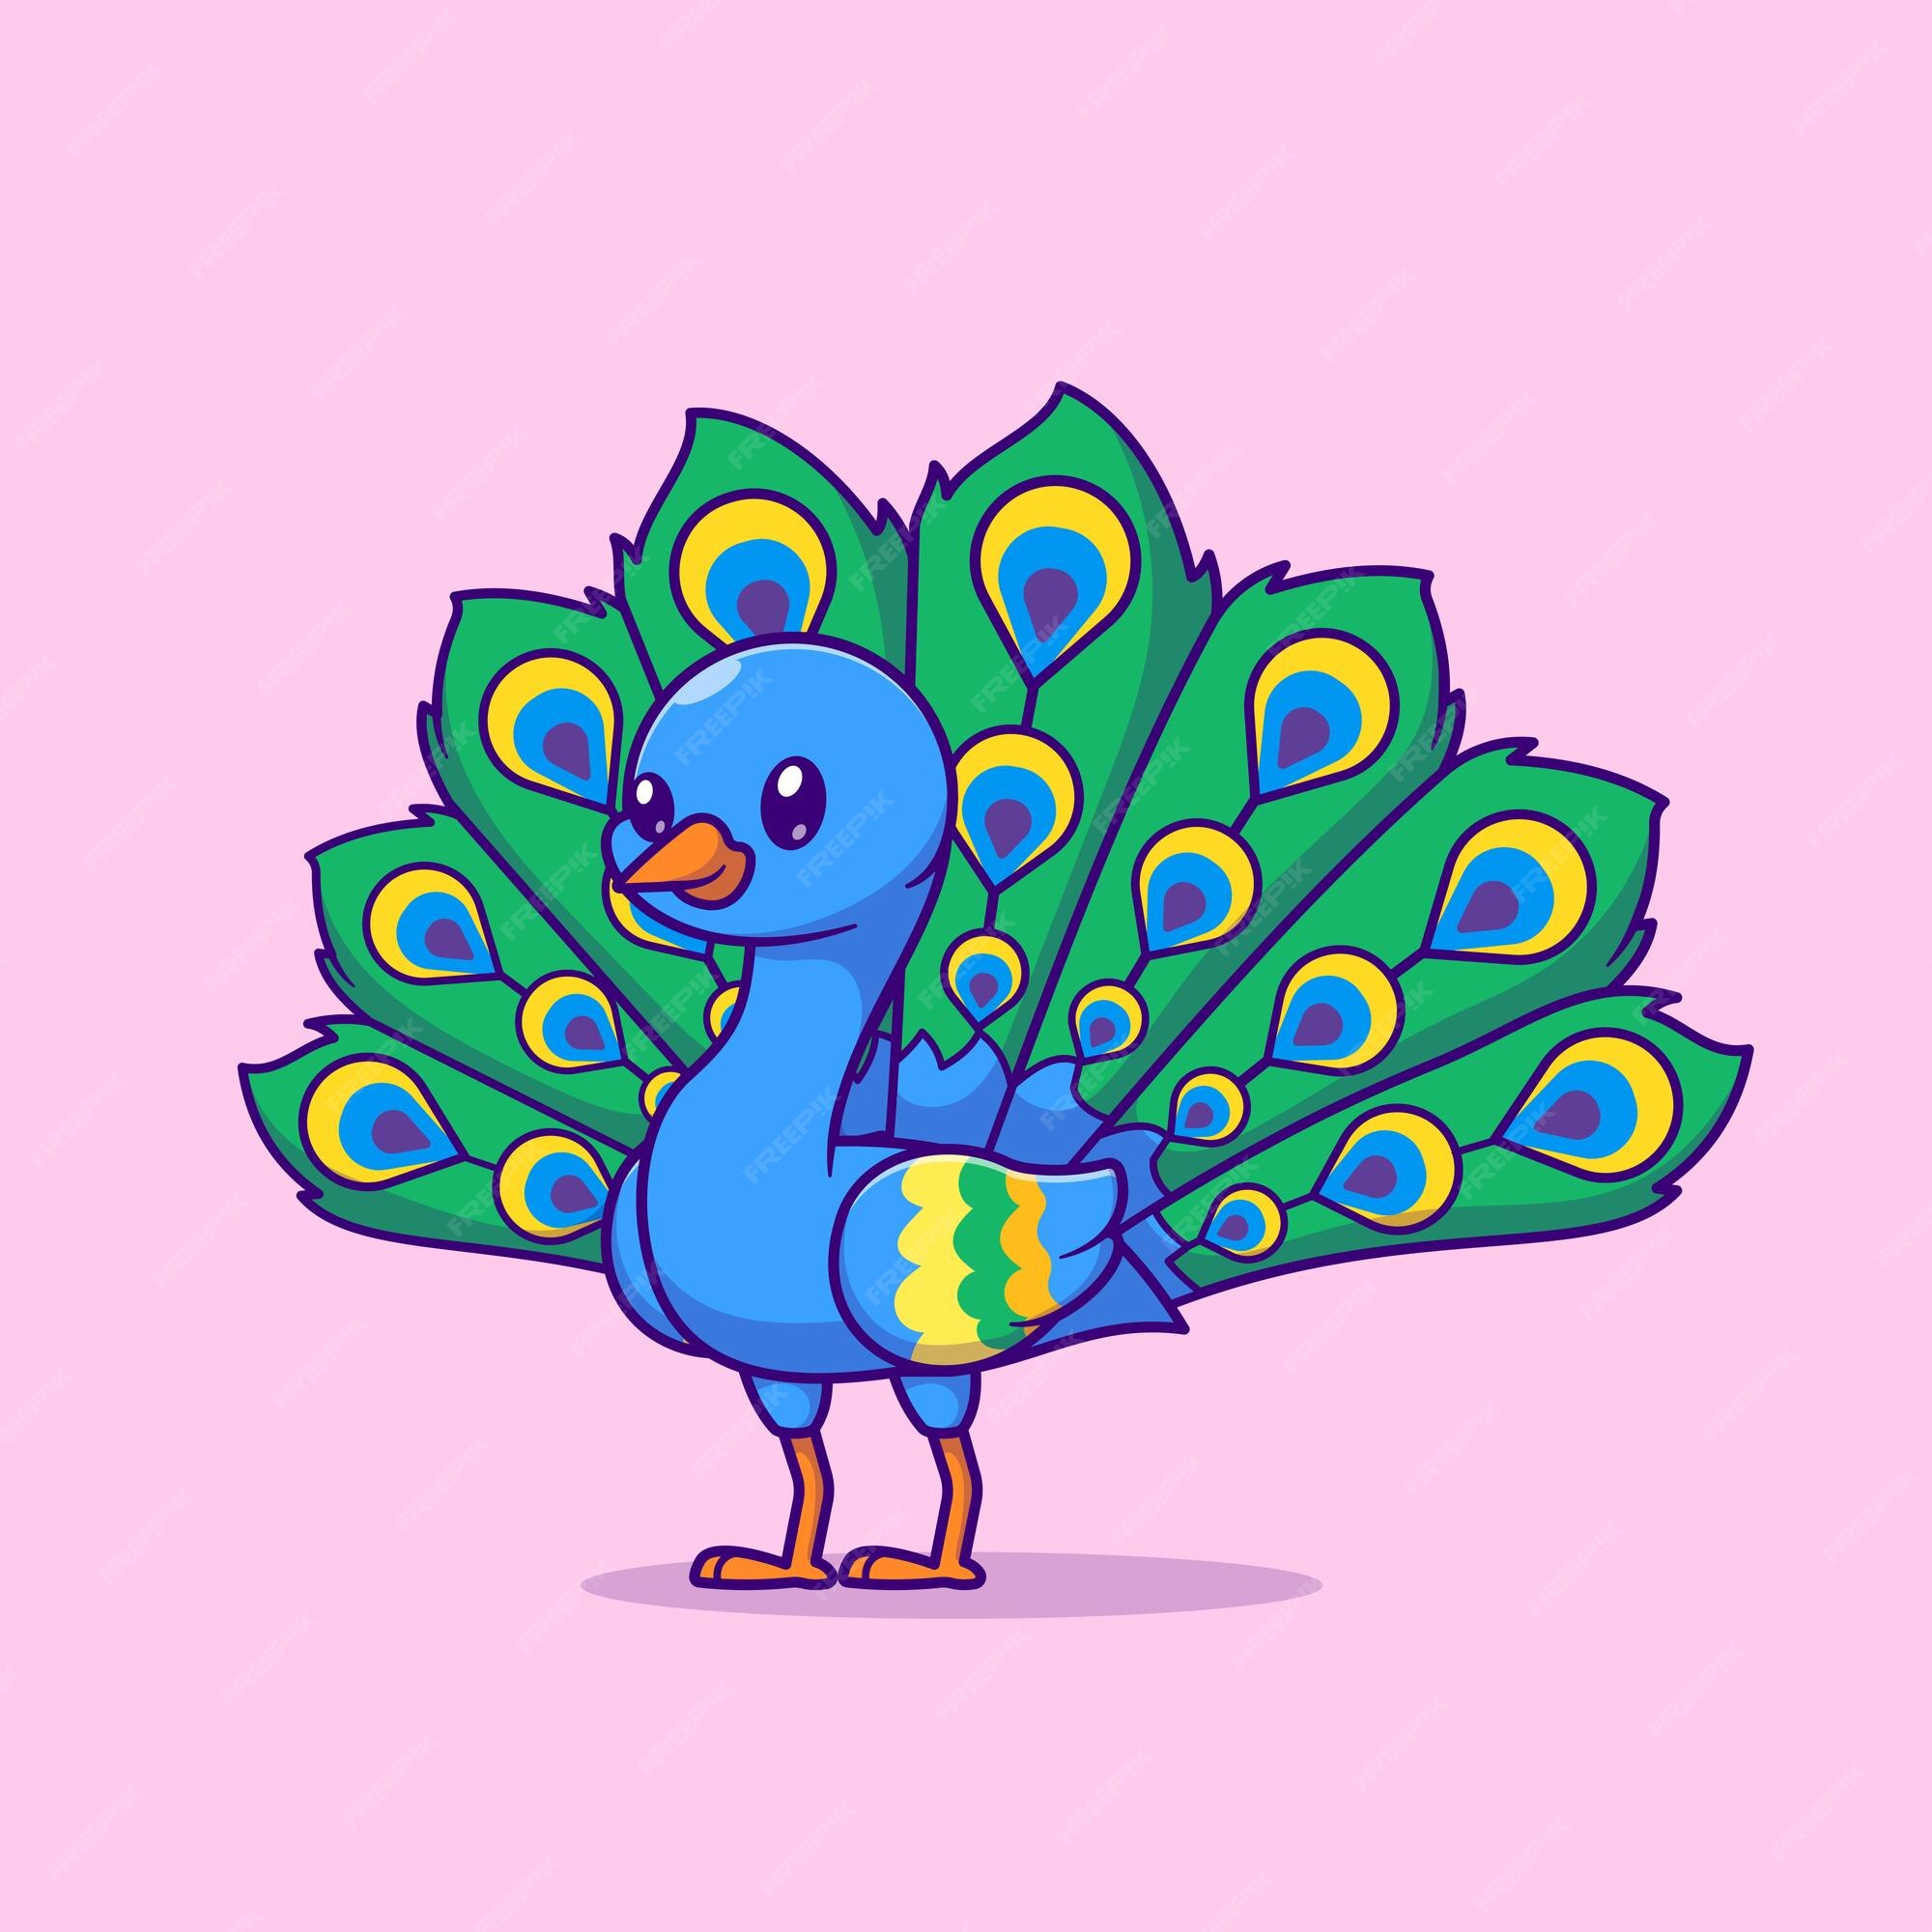 Peacock Cartoon Images - Free Download on Freepik